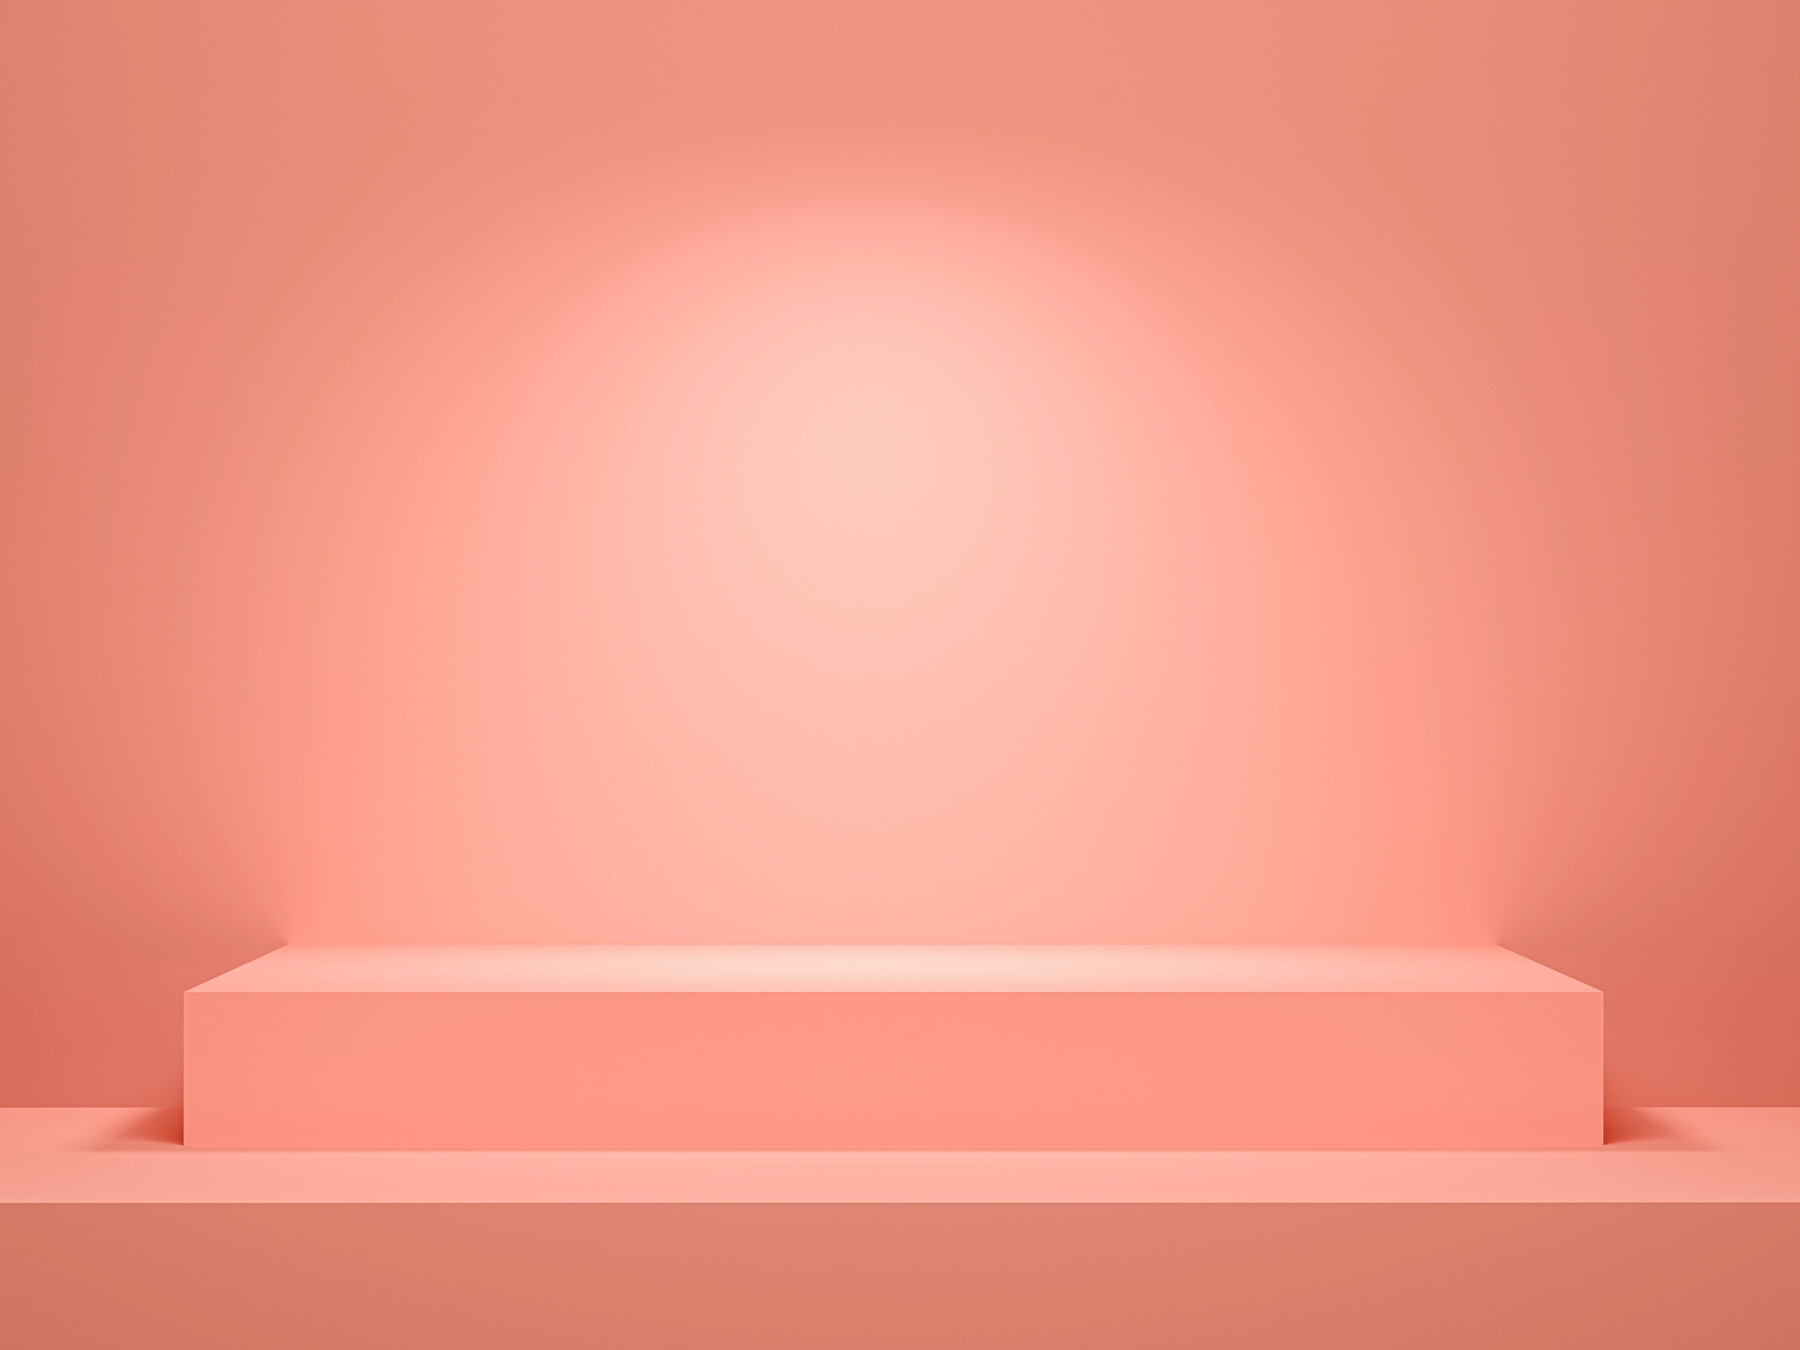 Concept empty illuminated showcase shelf 3D rendering